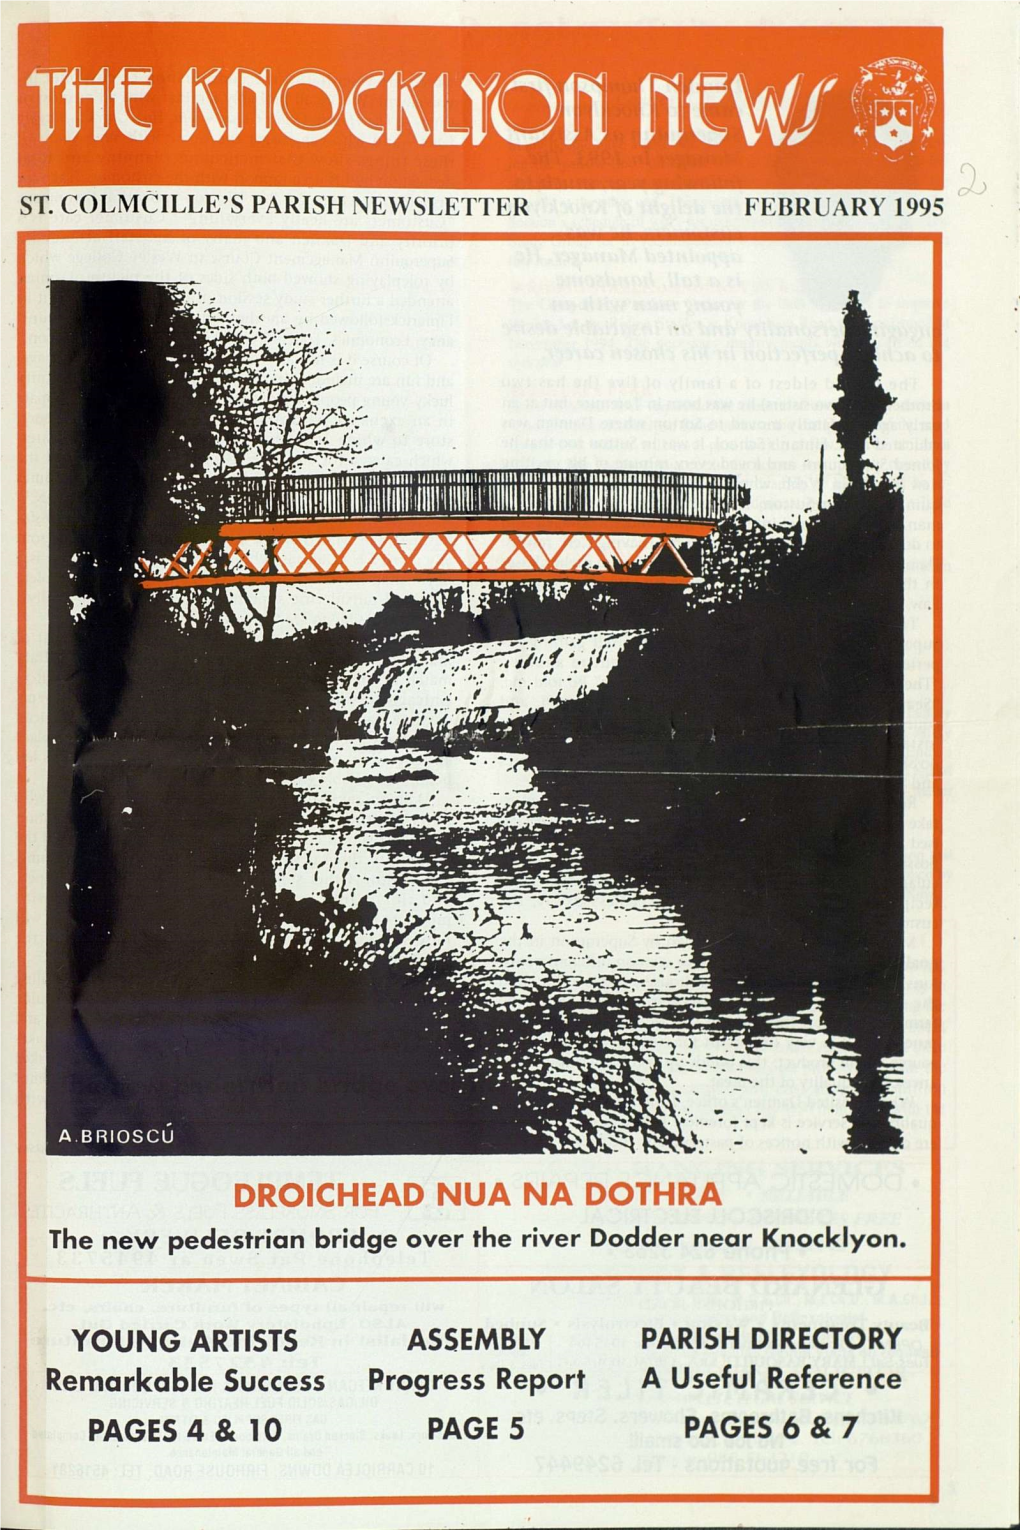 DROICHEAD NUA NA DOTHRA the New Pedestrian Bridge Over the River Dodder Near Knocklyon